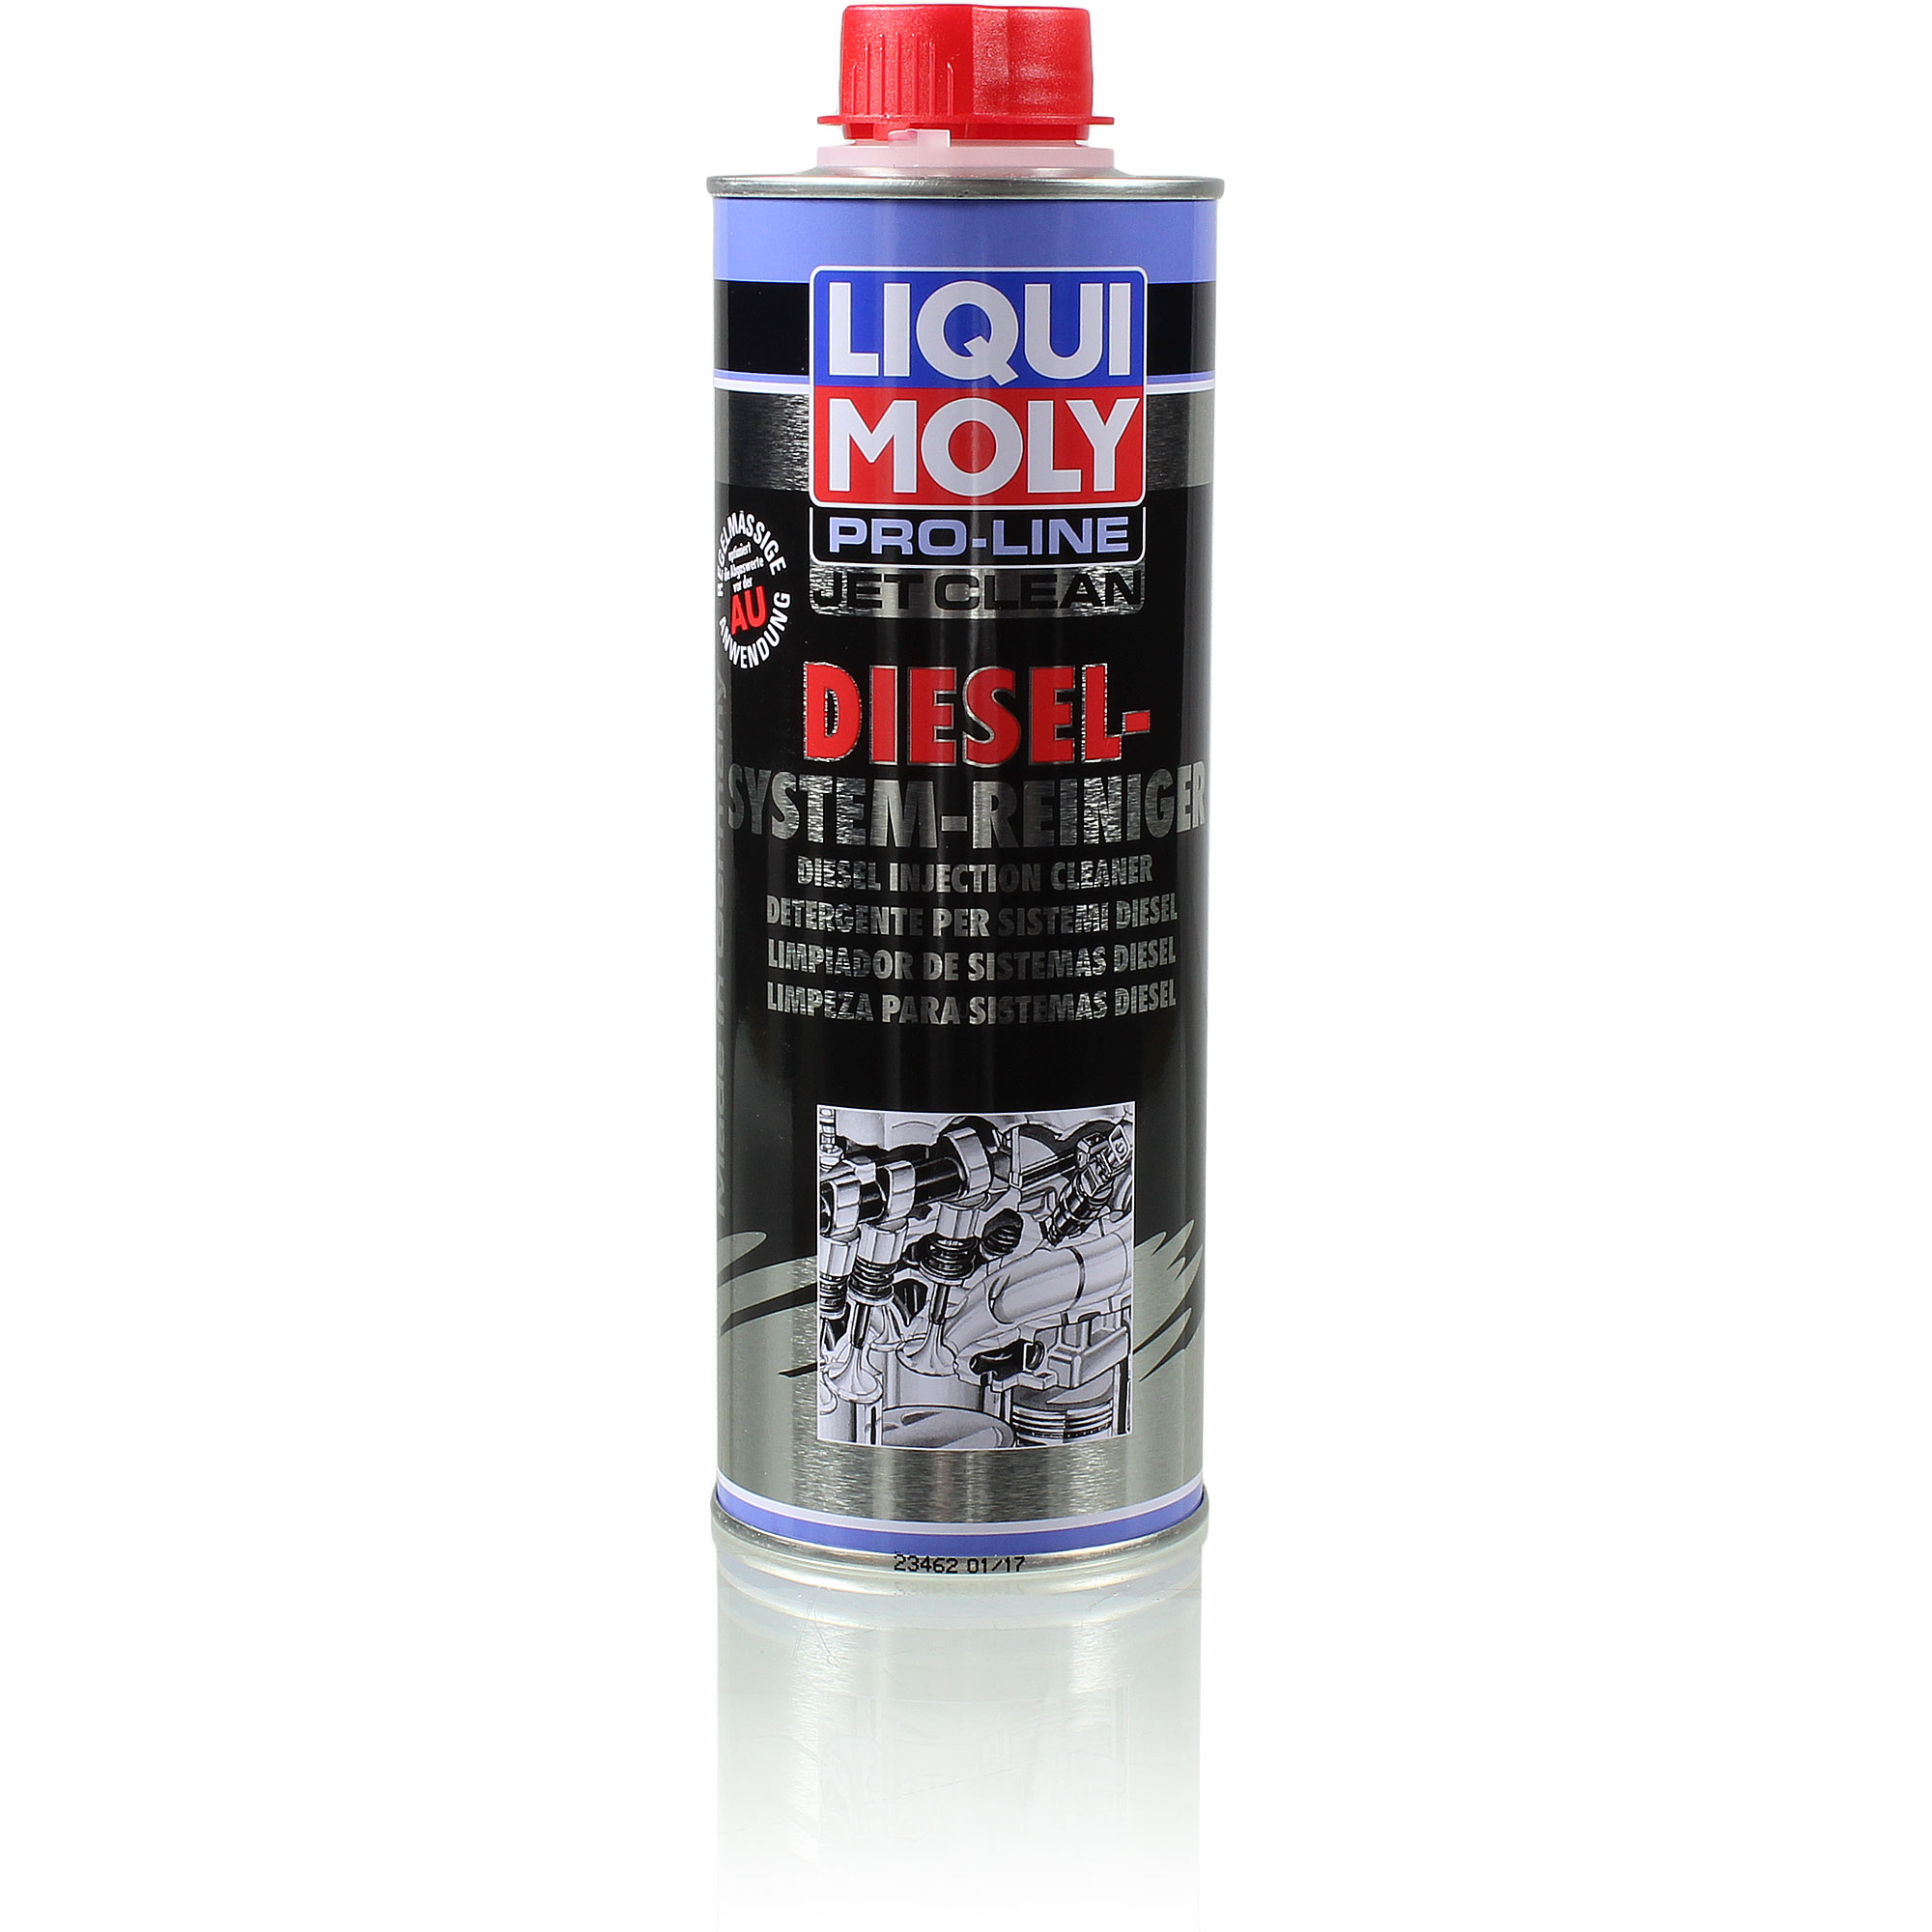  LIQUI MOLY 5154 Pro Line JetClean Diesel System Reiniger Dose 500 ml